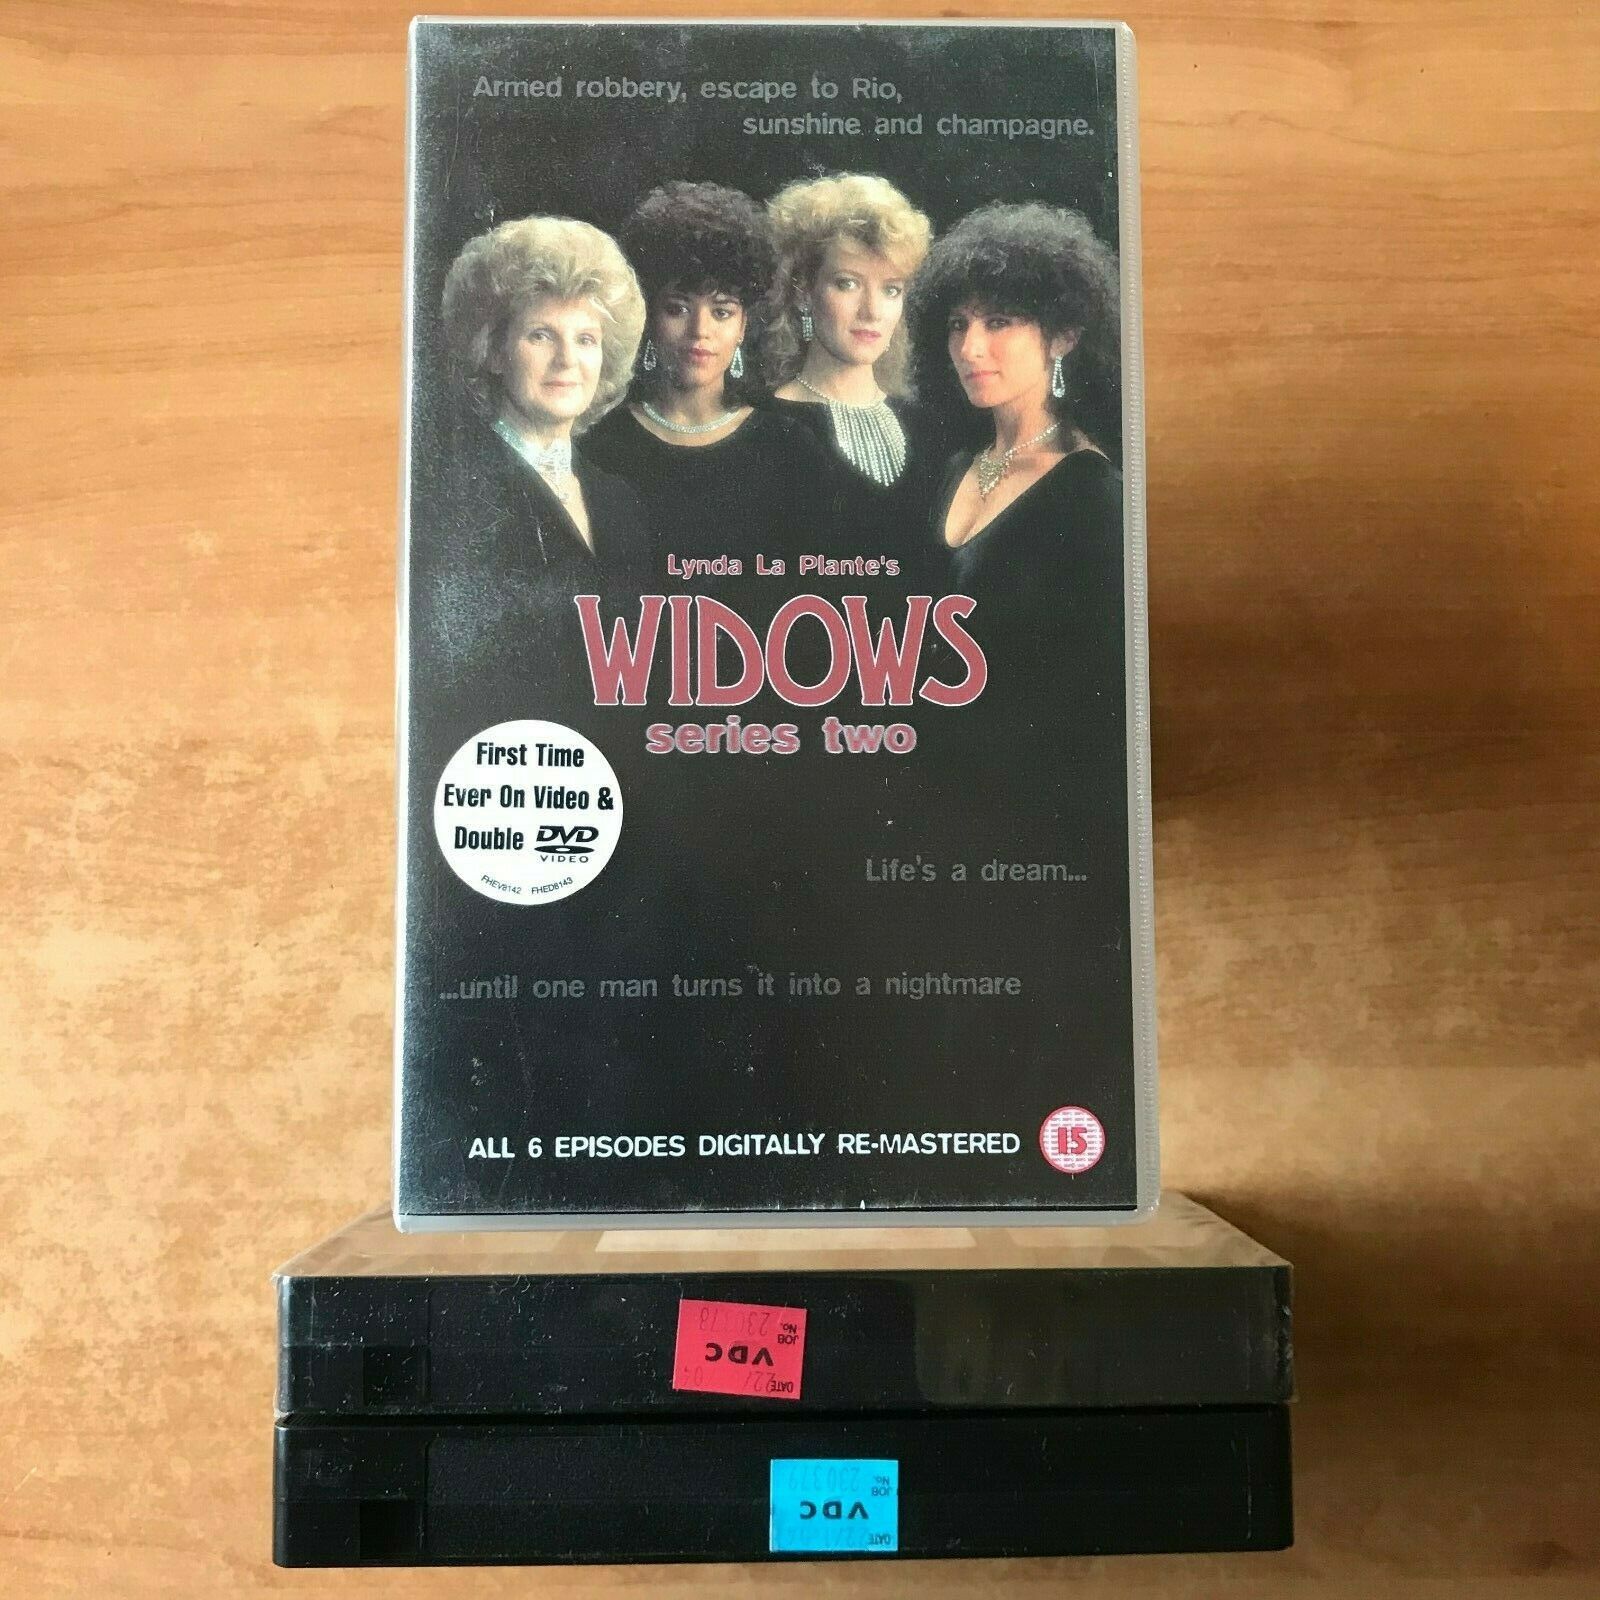 Widows (Series 2); [Lynda La Plante] Digitally Mastered - TV Drama Series - VHS-